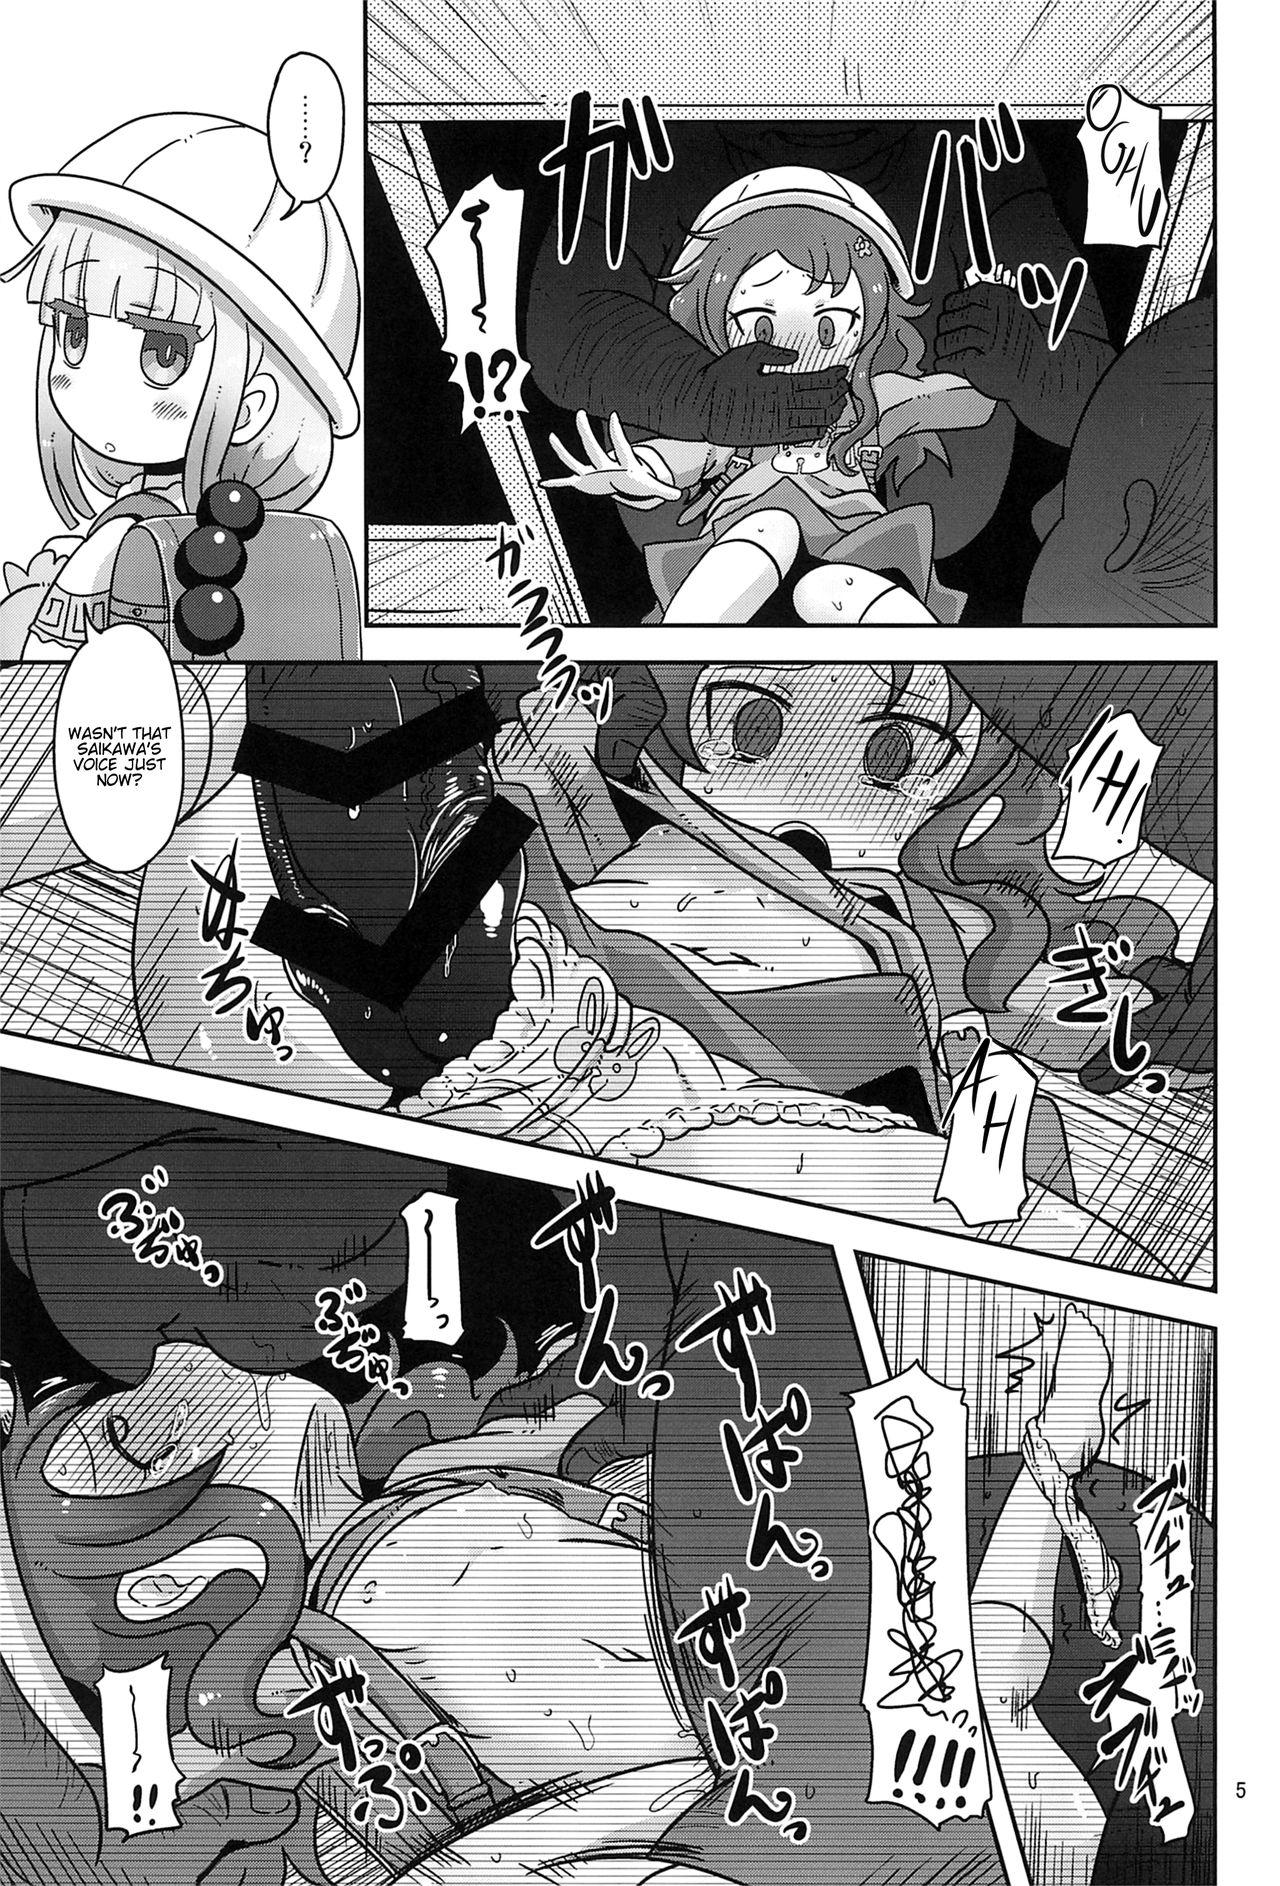 Euro Dragonic Lolita Bomb! - Kobayashi-san-chi no maid dragon Reverse Cowgirl - Page 5